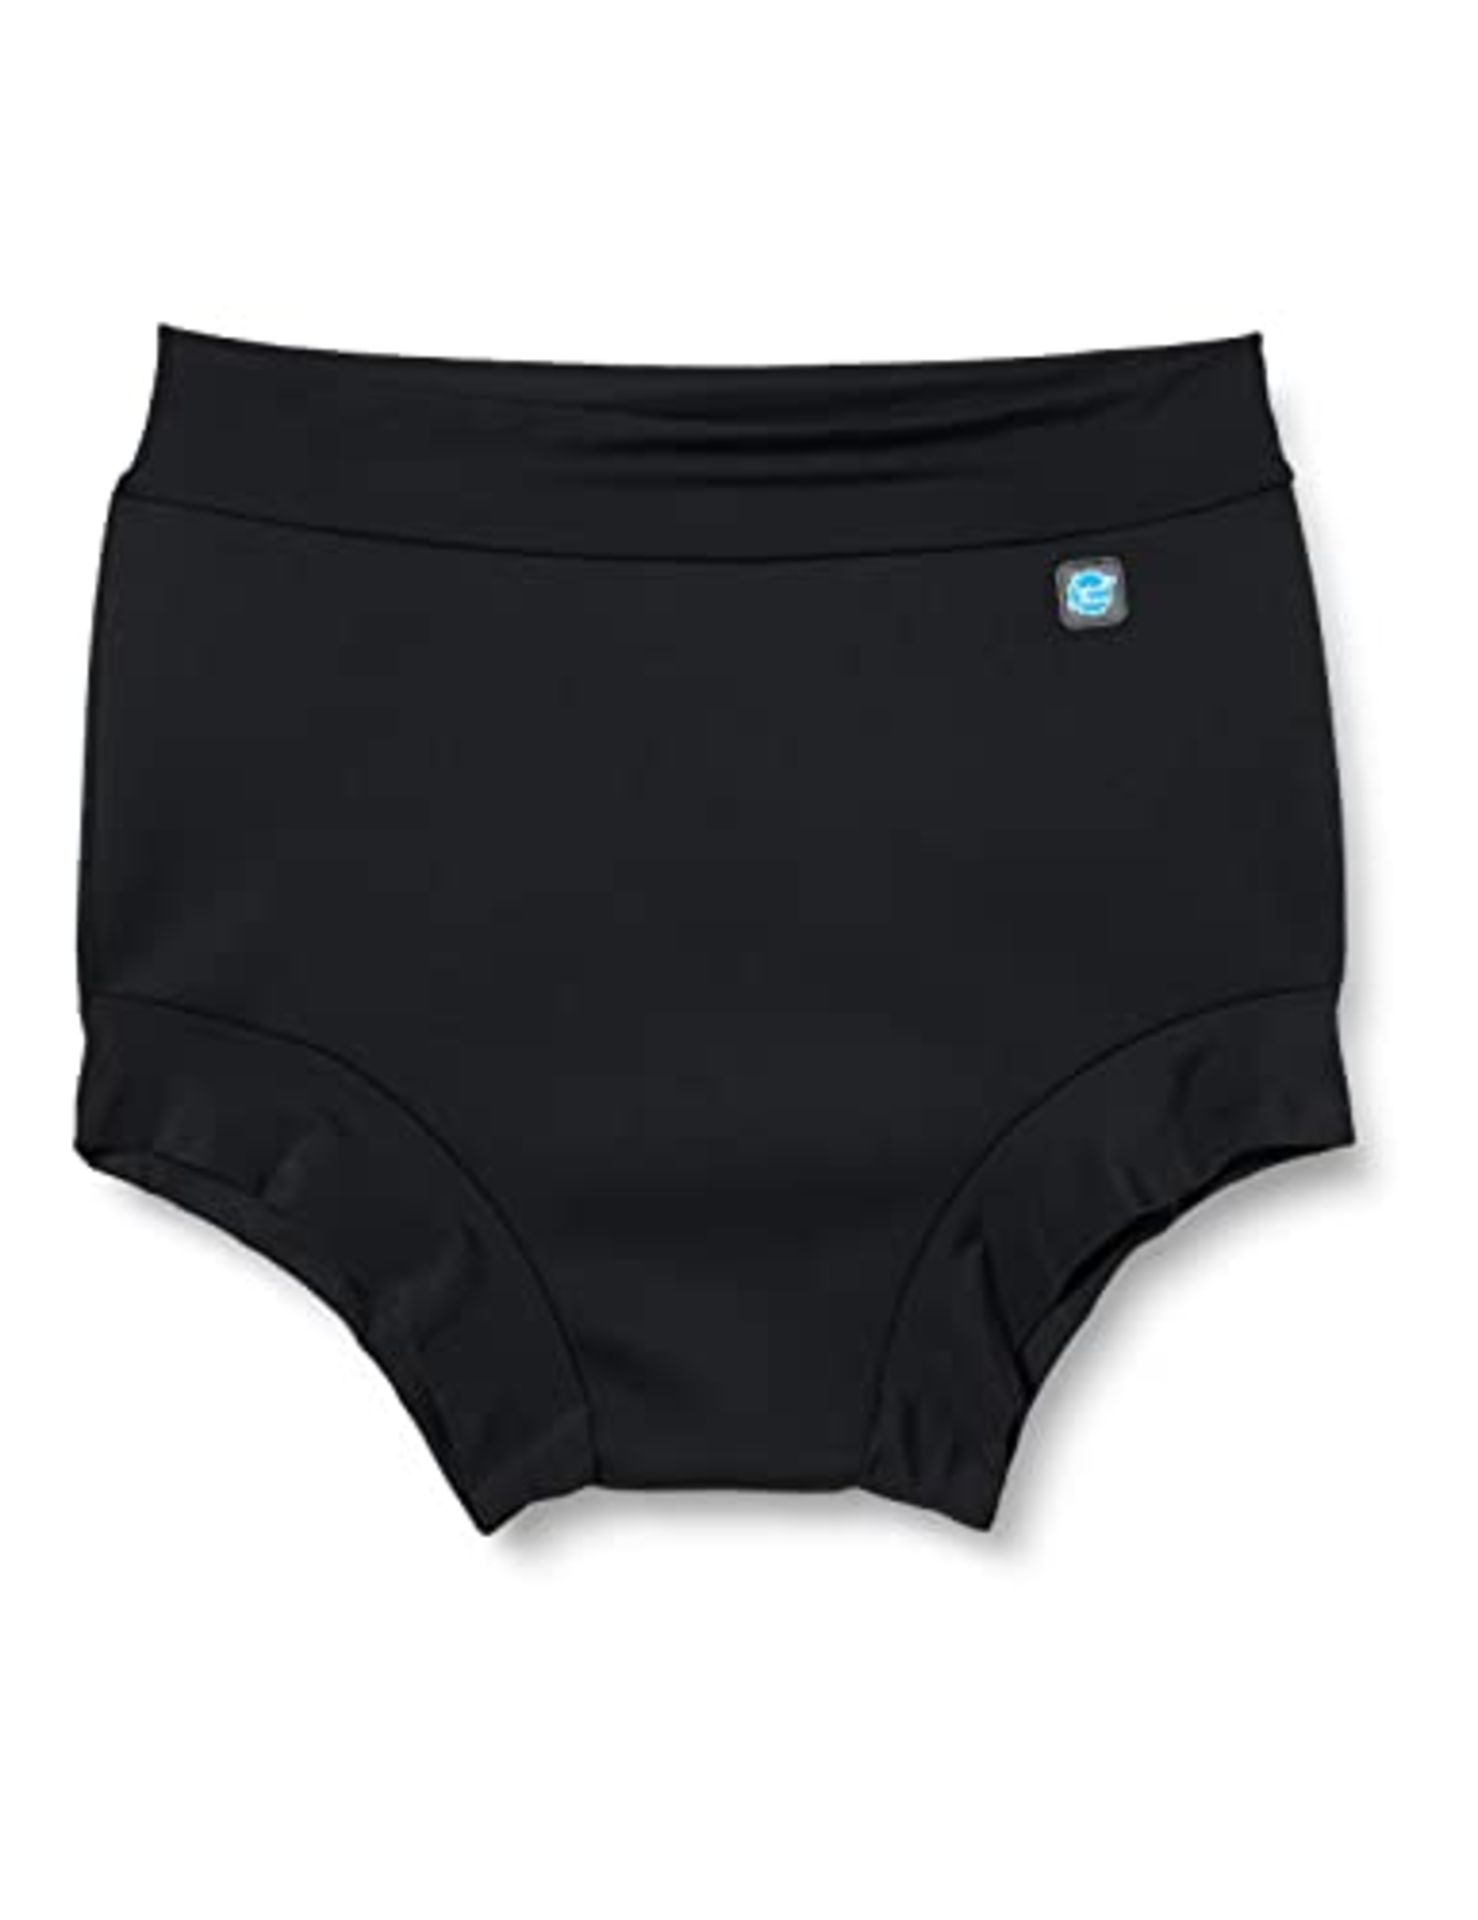 Splash About swim shorts for adults - Black, Medium